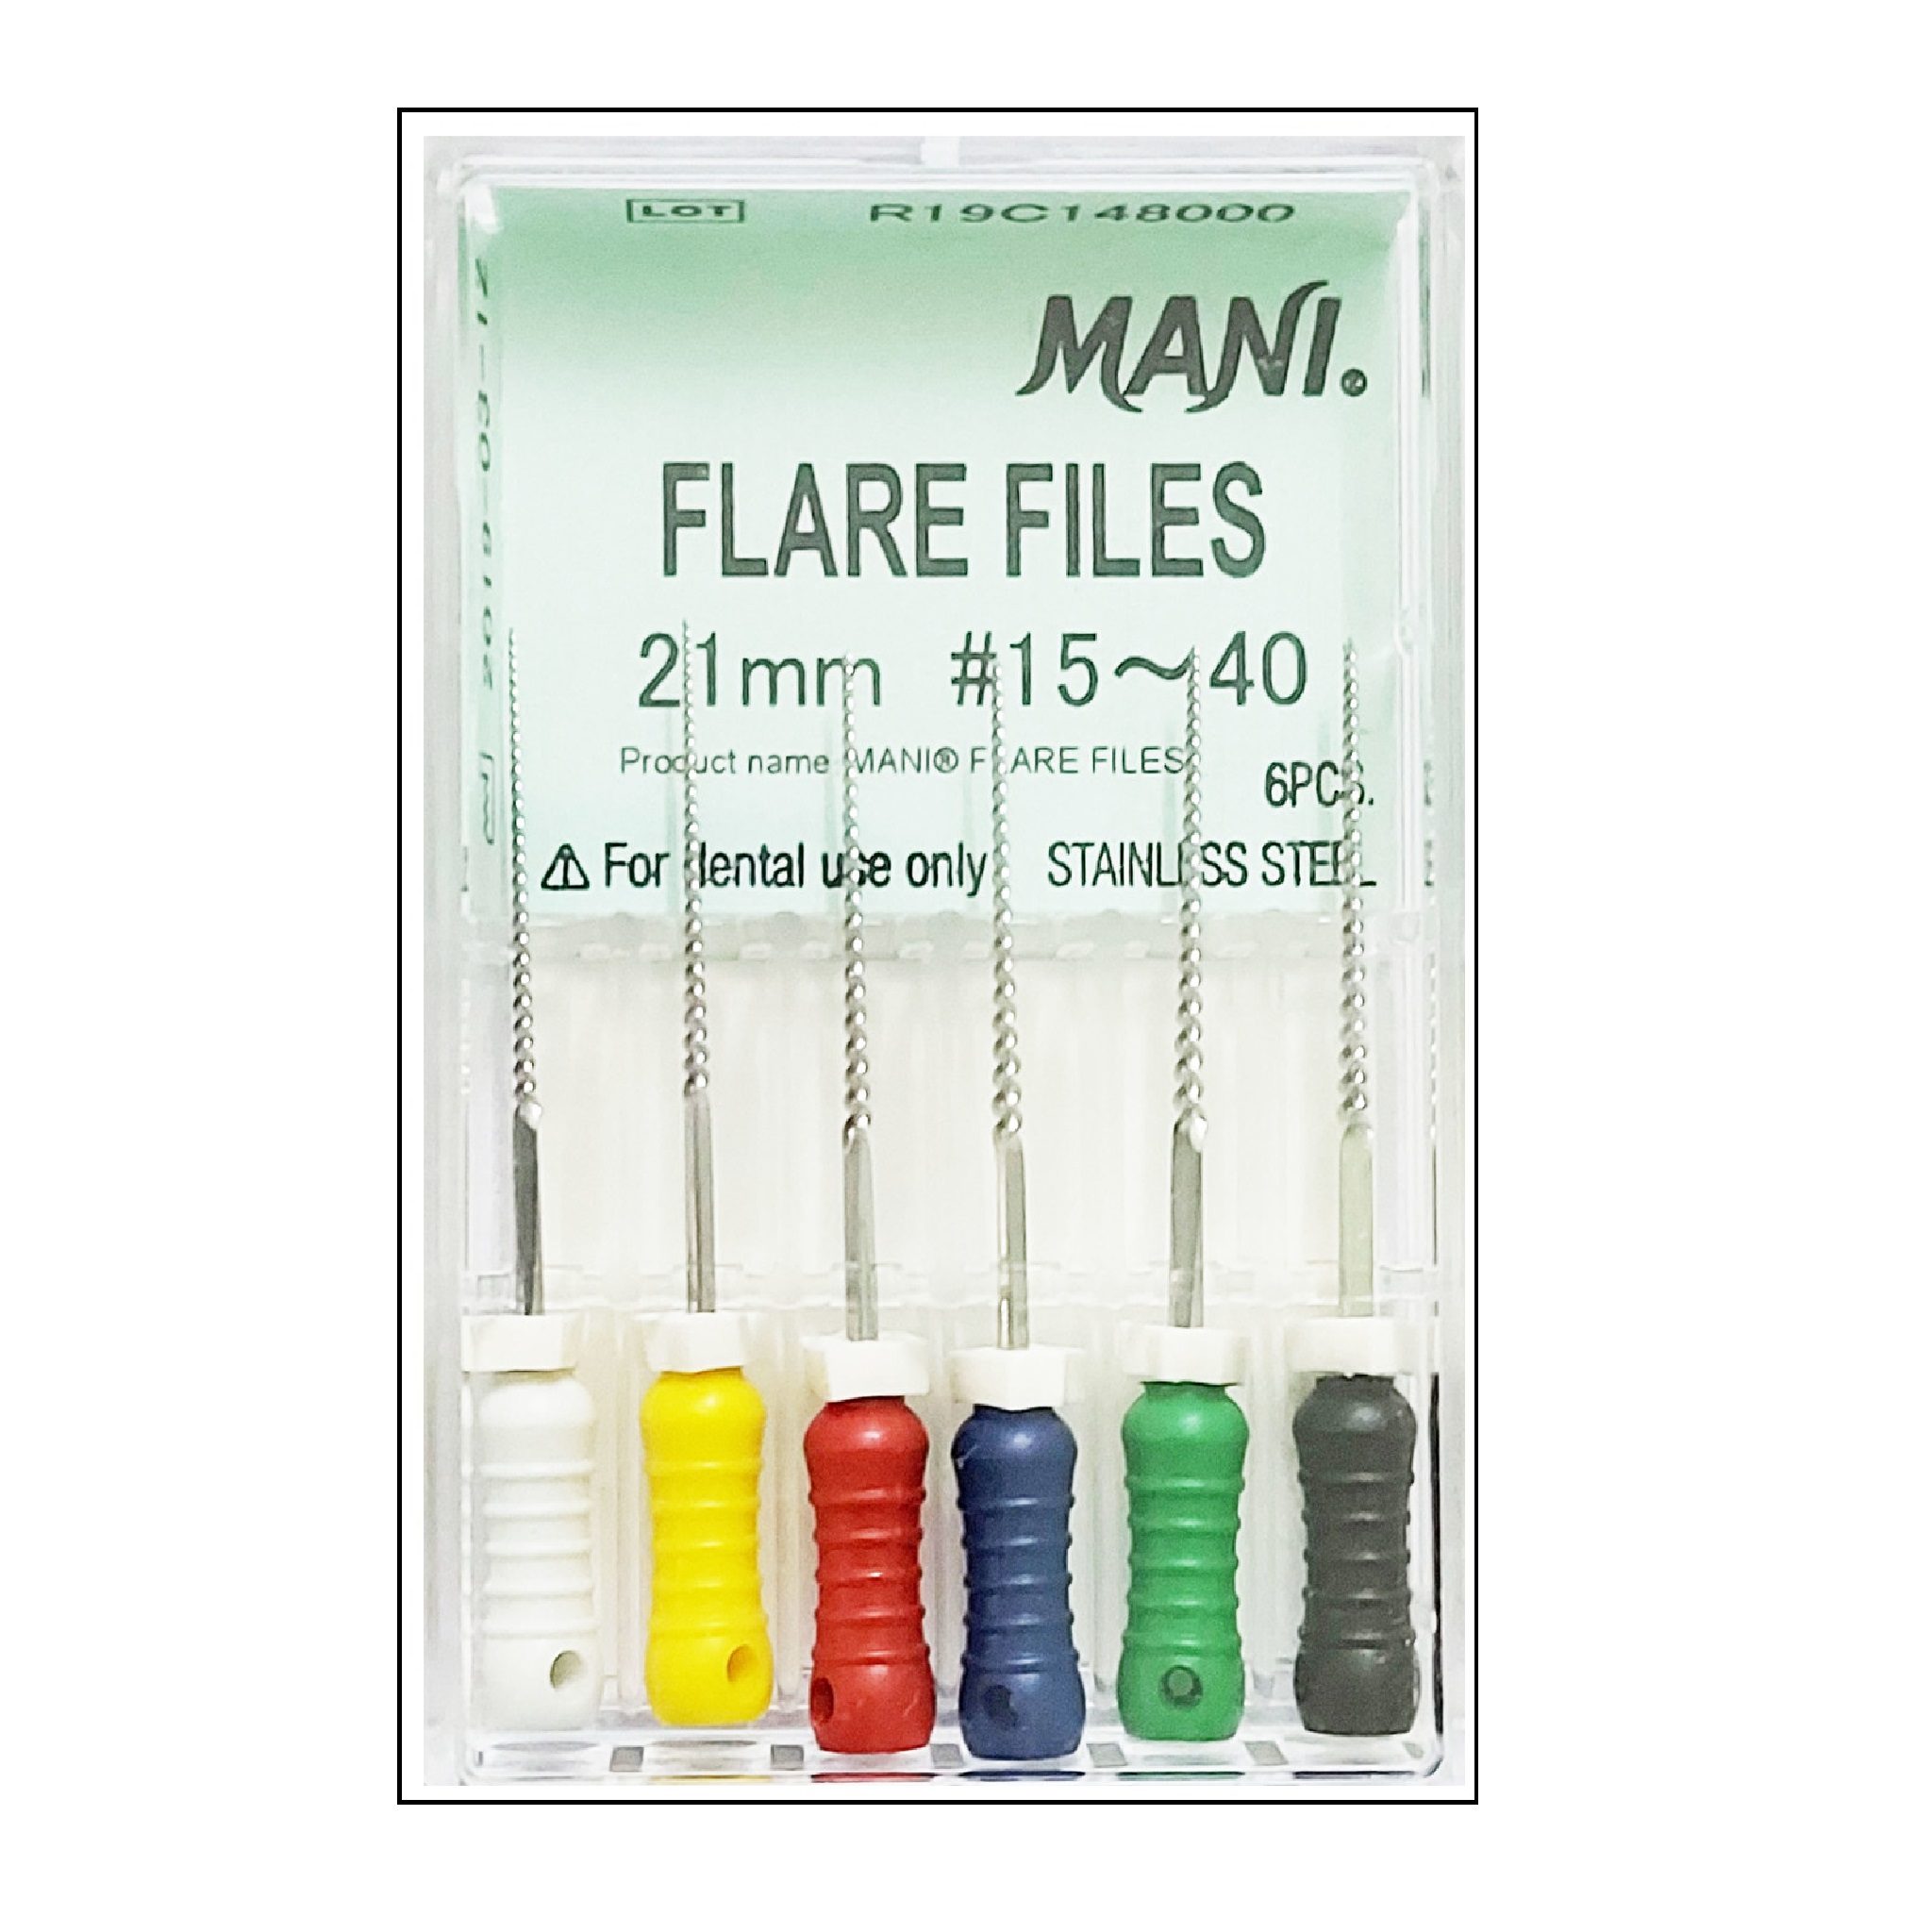 Mani Flare Files 21mm #15-40